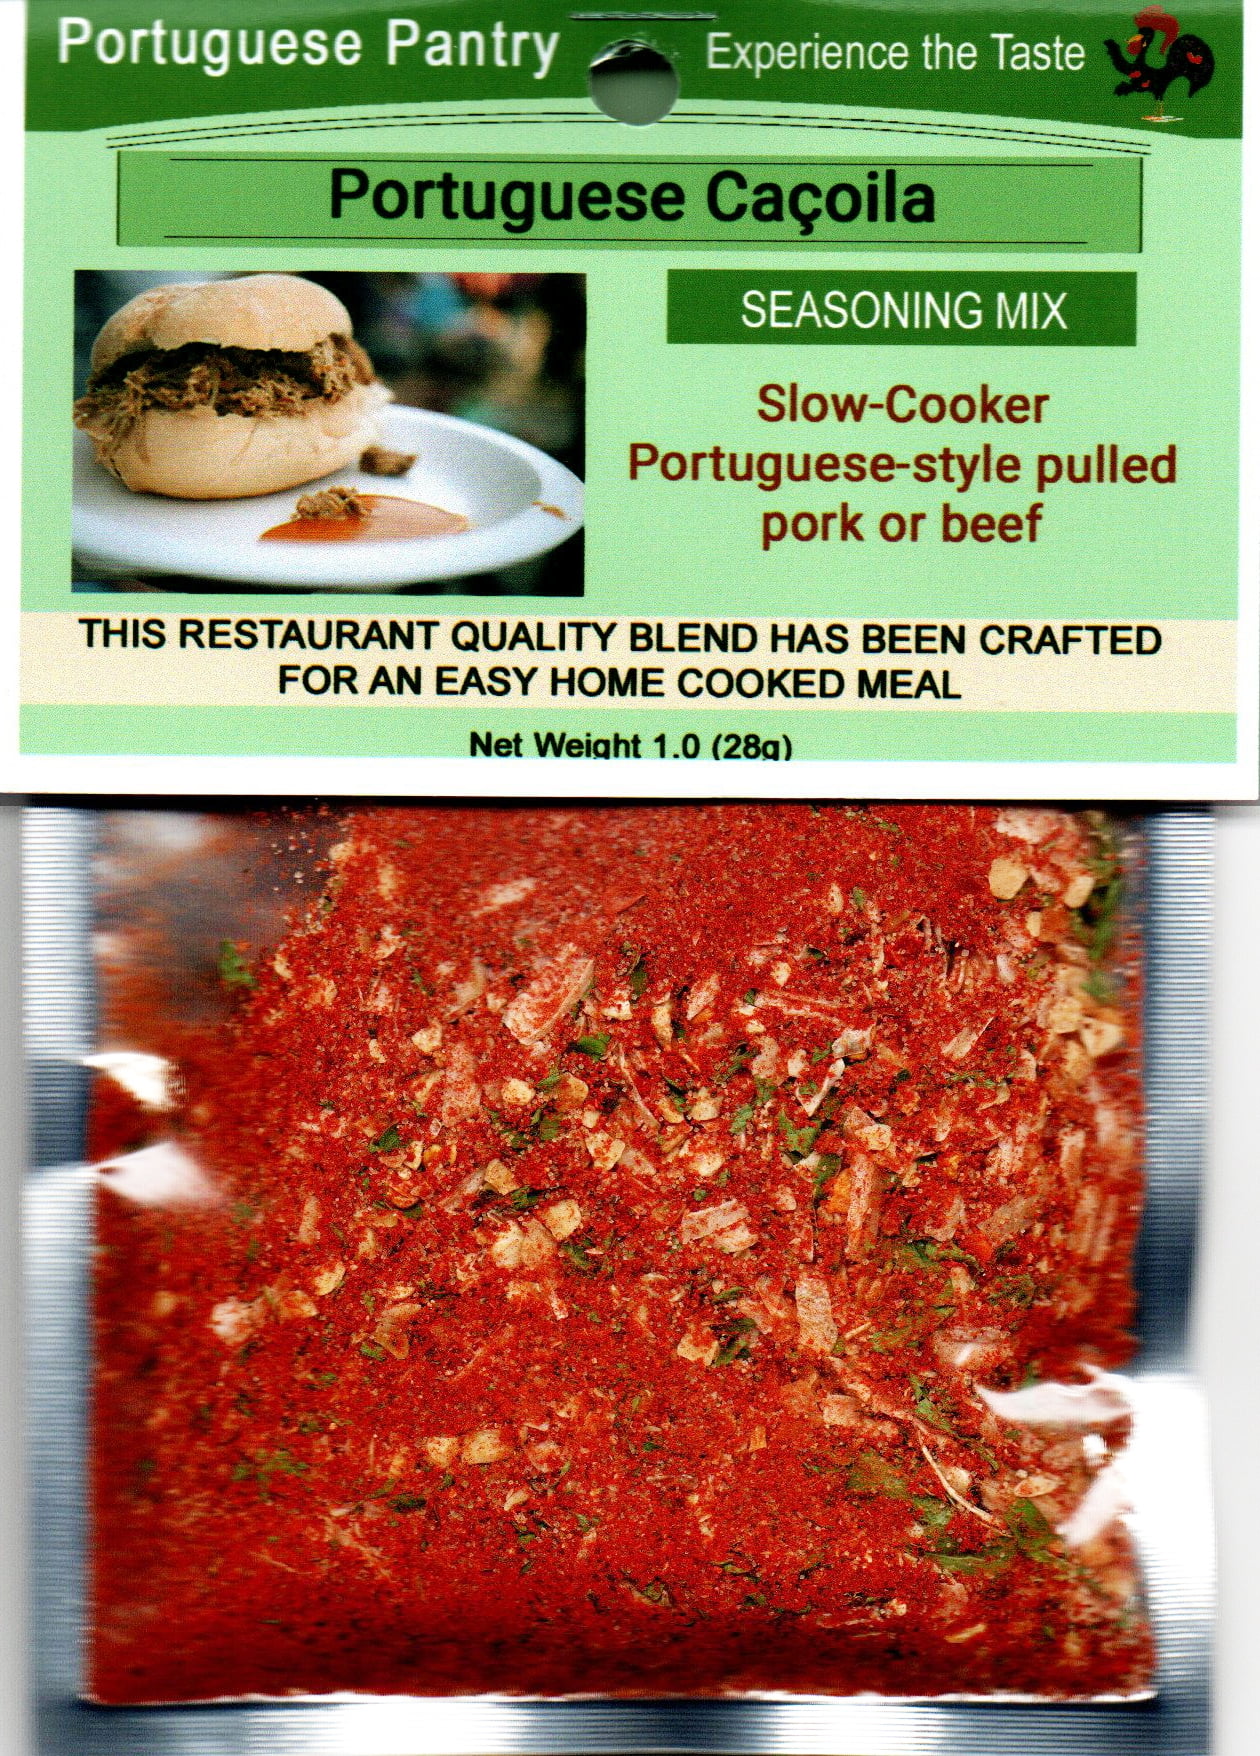 Portuguese Cacoila Seasoning Mix - Portuguese Pulled Pork - Walmart.com